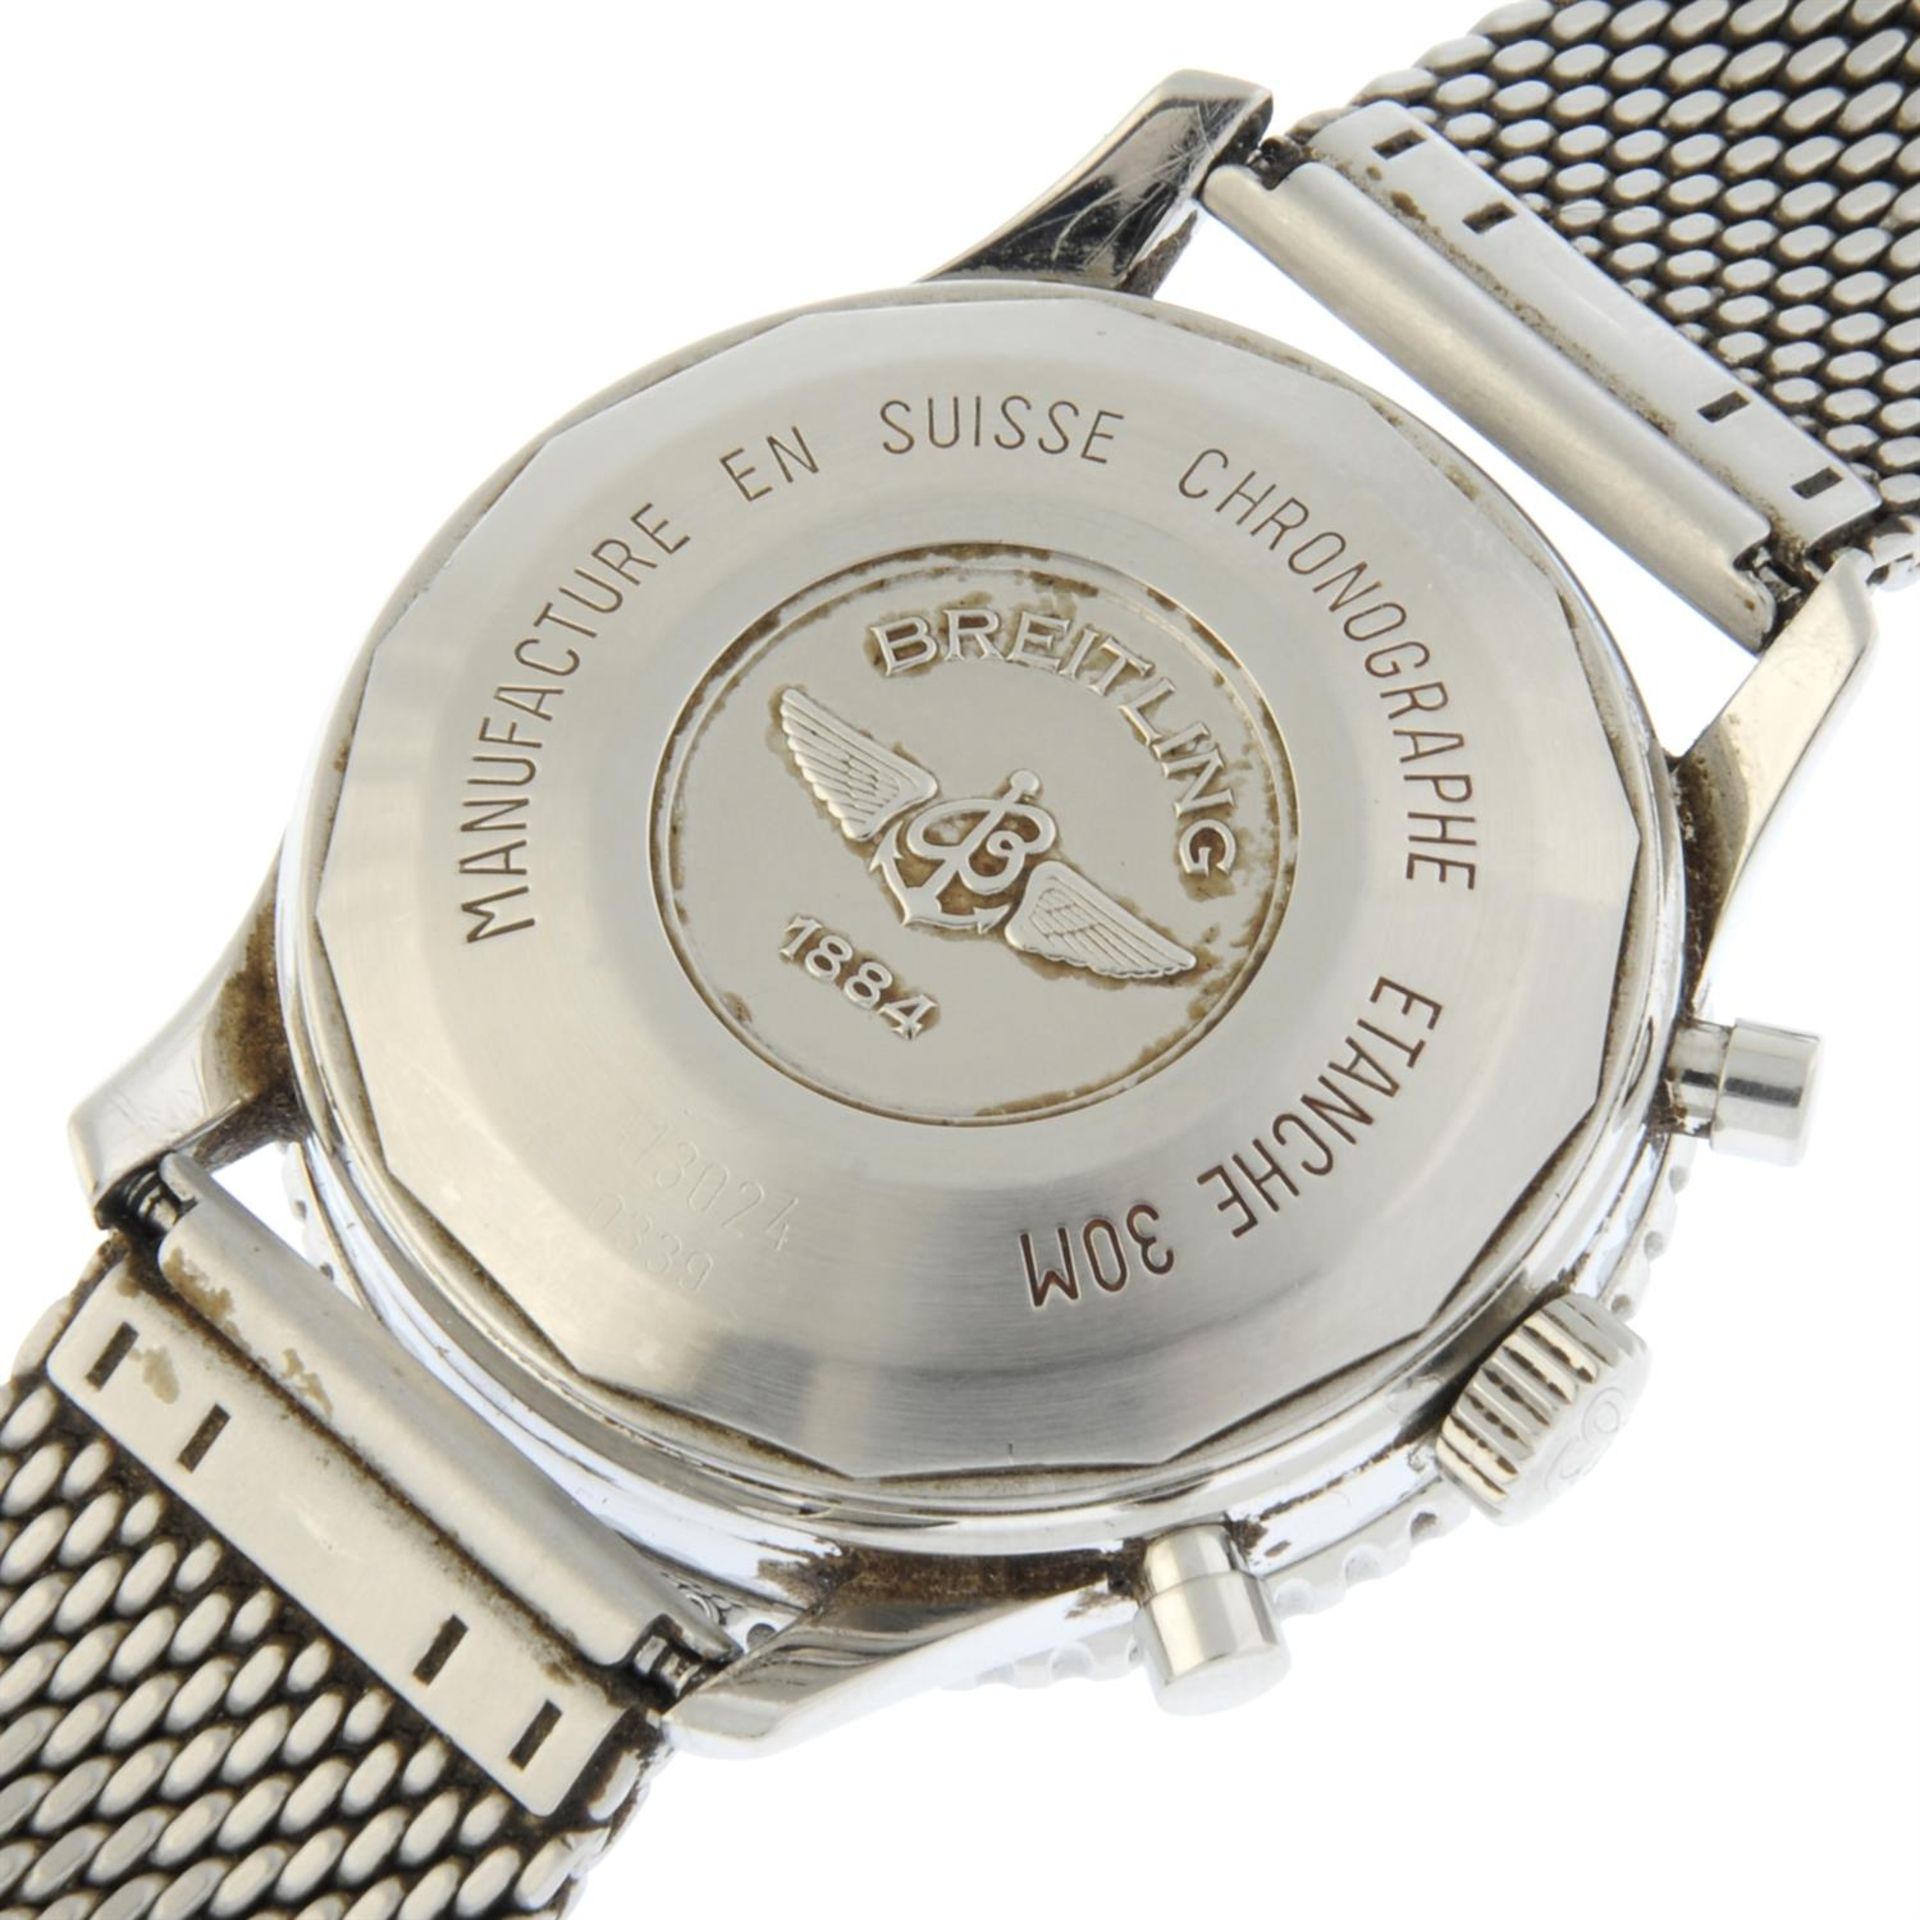 Breitling - an Aviastar chronograph watch, 41.5mm. - Bild 5 aus 7